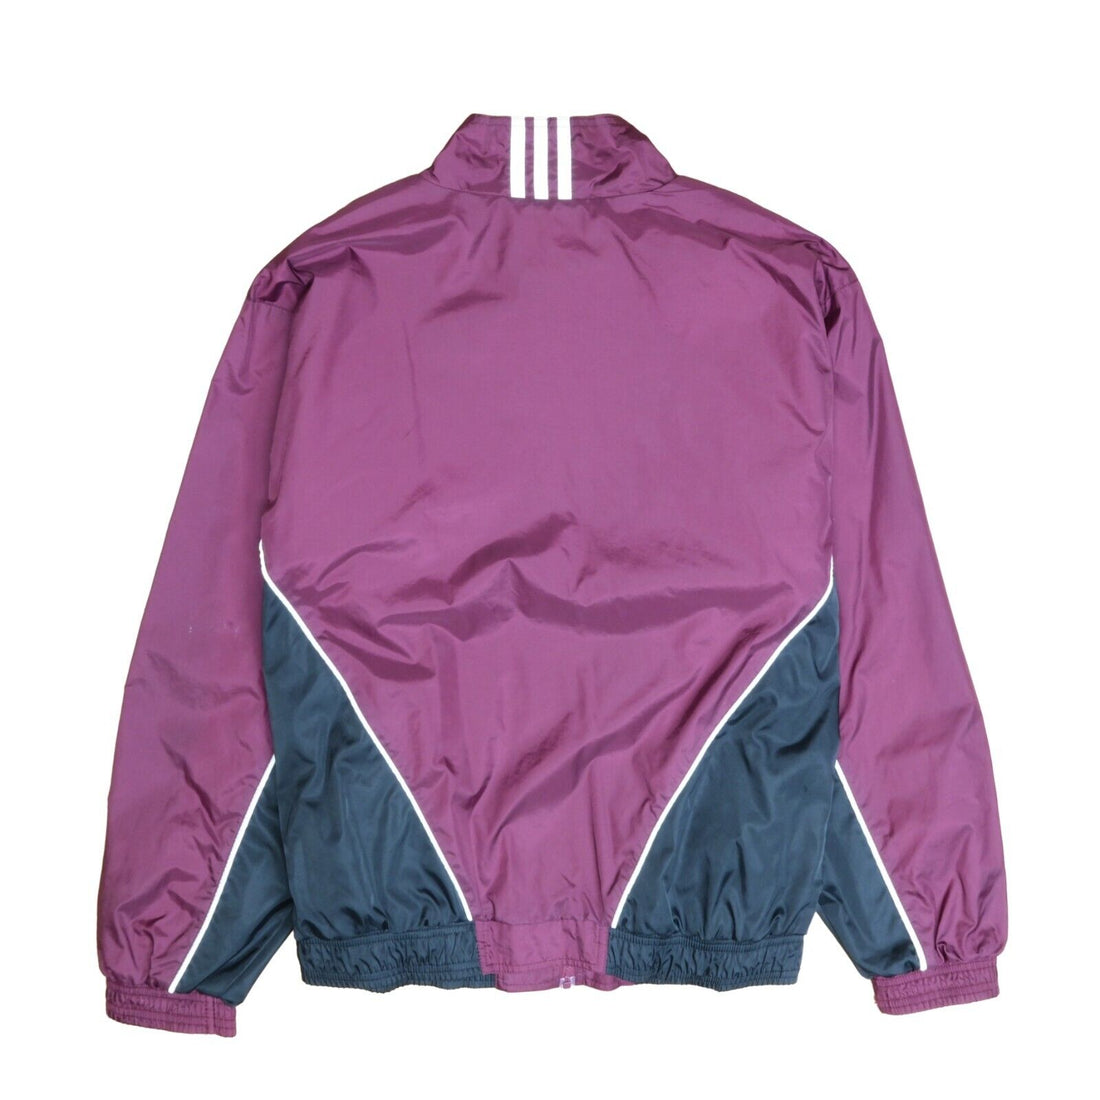 Vintage Adidas Windbreaker Light Jacket Size Medium Magenta